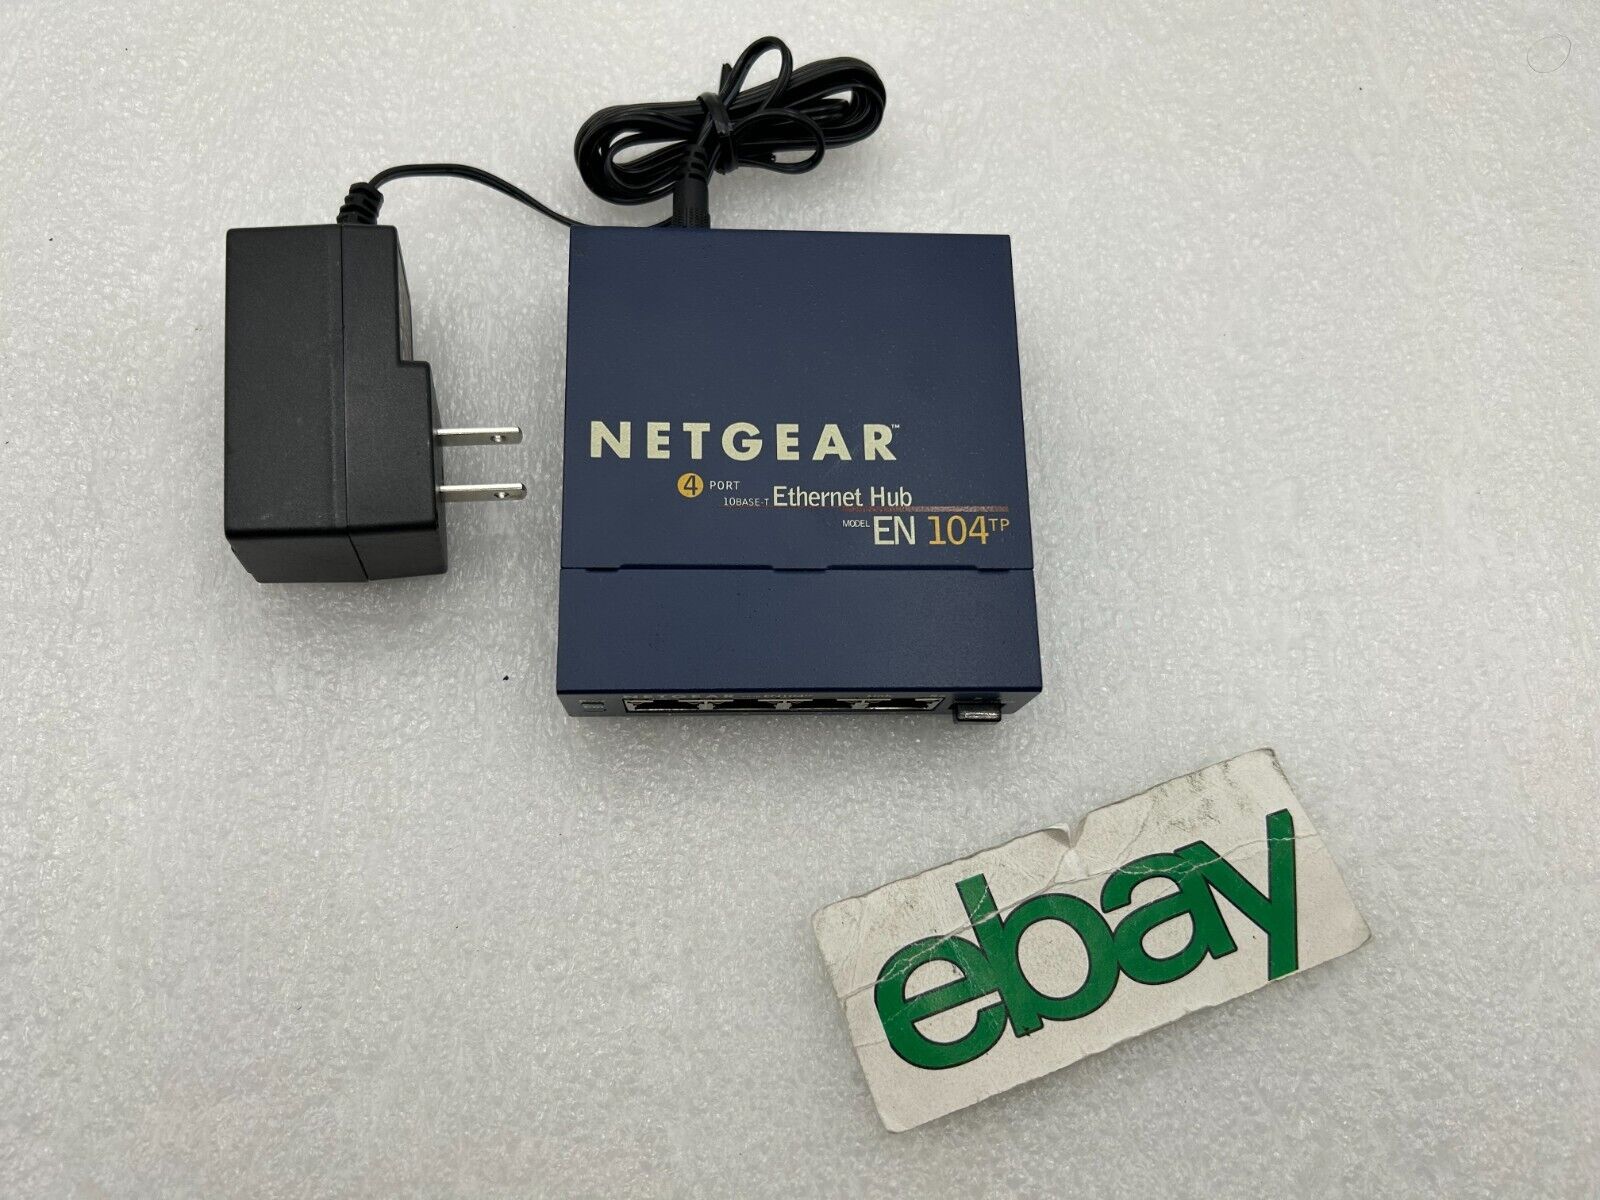 Netgear EN104TP Blue 4-Port 10 Mbps RJ-45 Ethernet Hub with AC Power Adapter